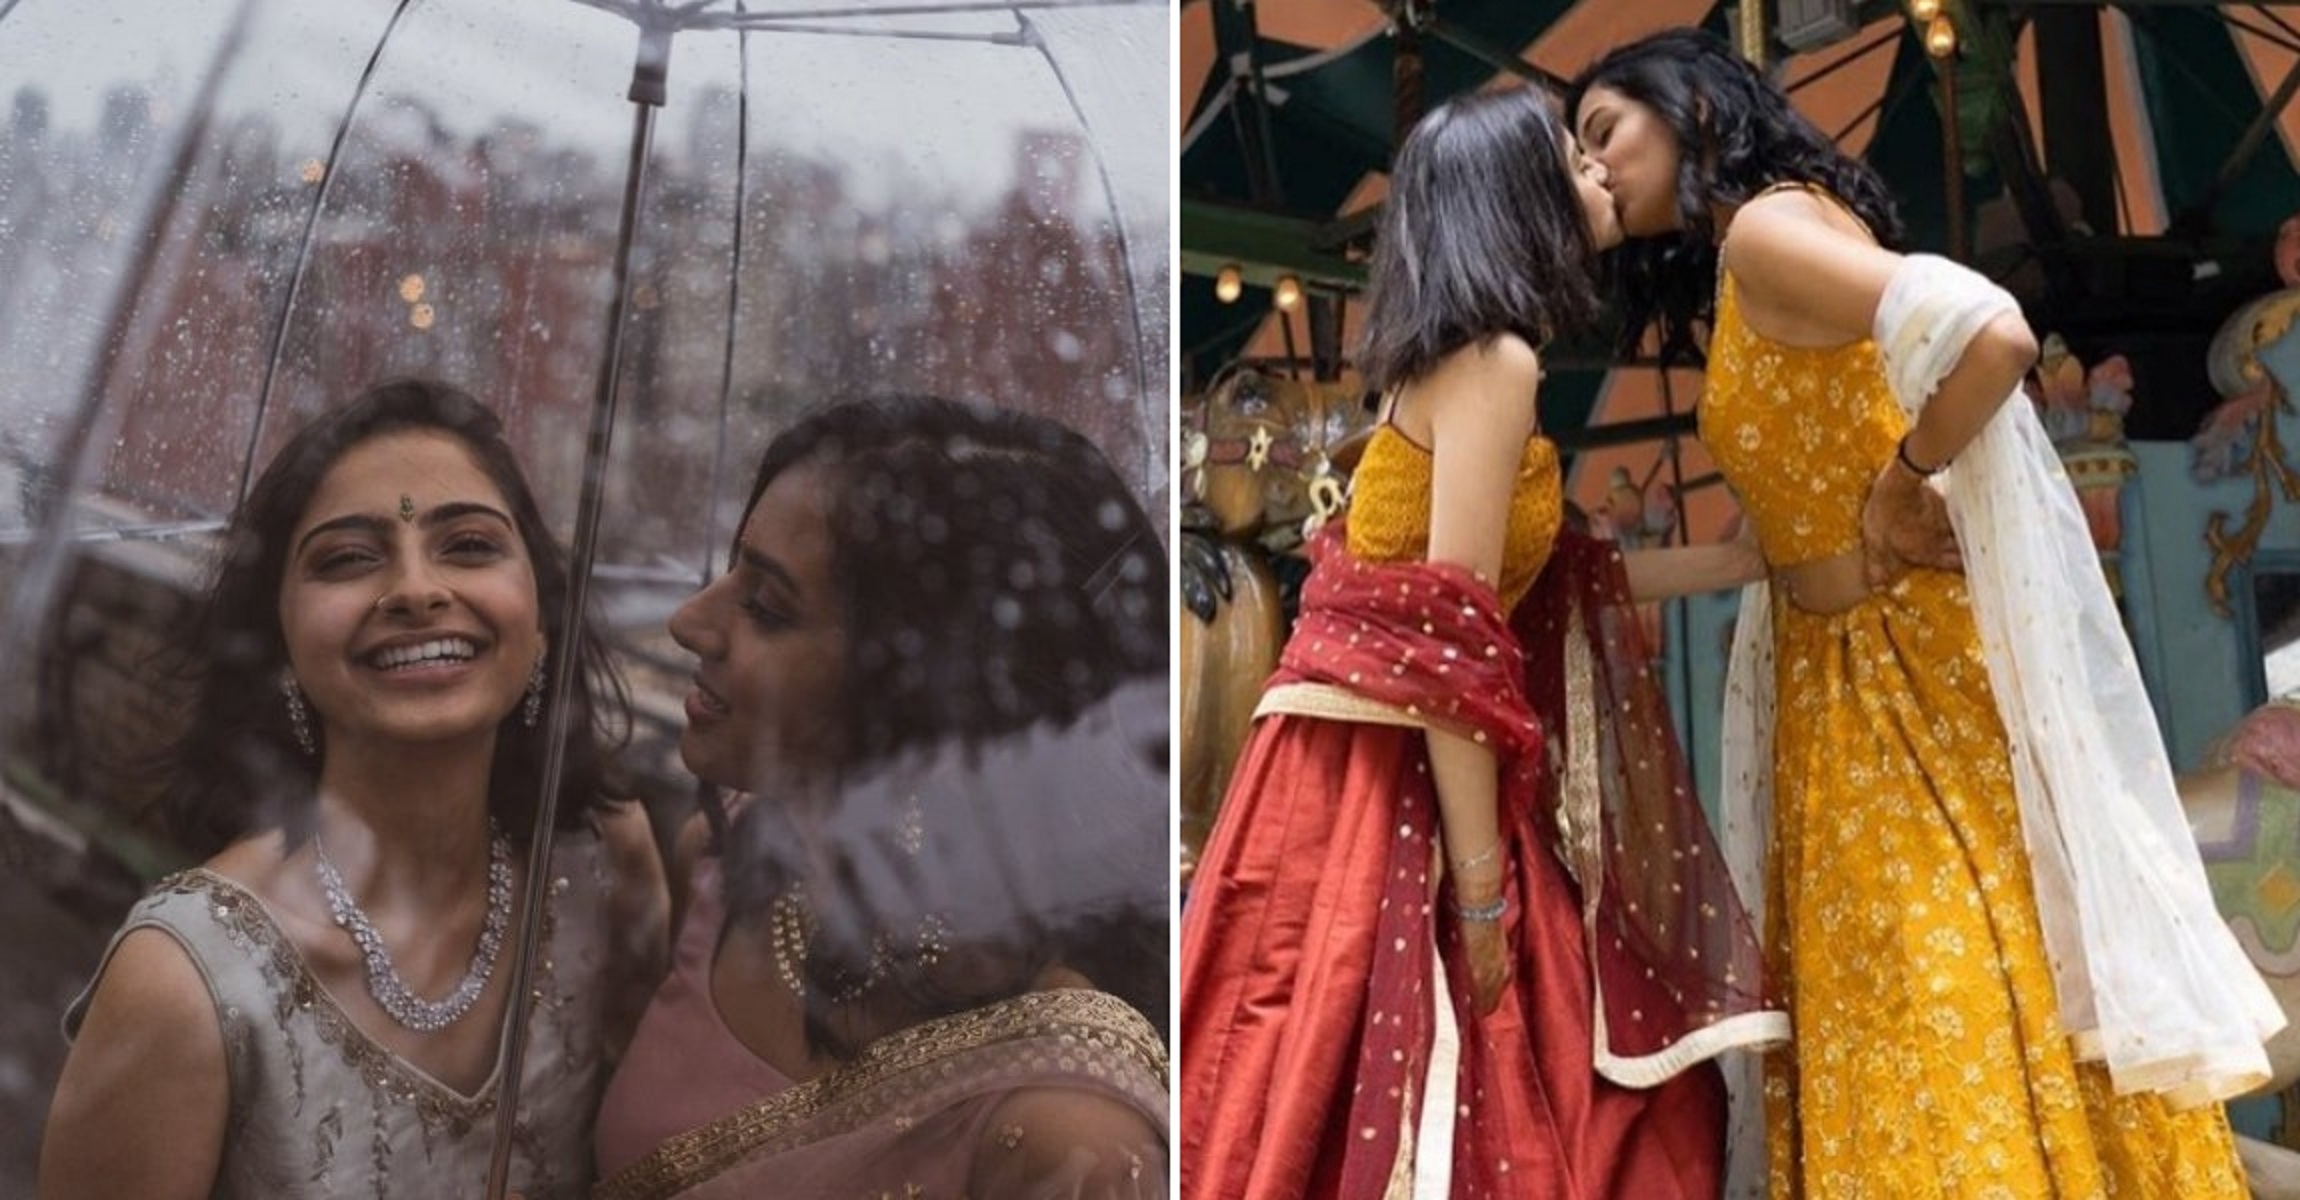 Muslim Lesbian Sex Hot - Indian Hindu Girl's Love Story With Pakistani Muslim Woman Is ...